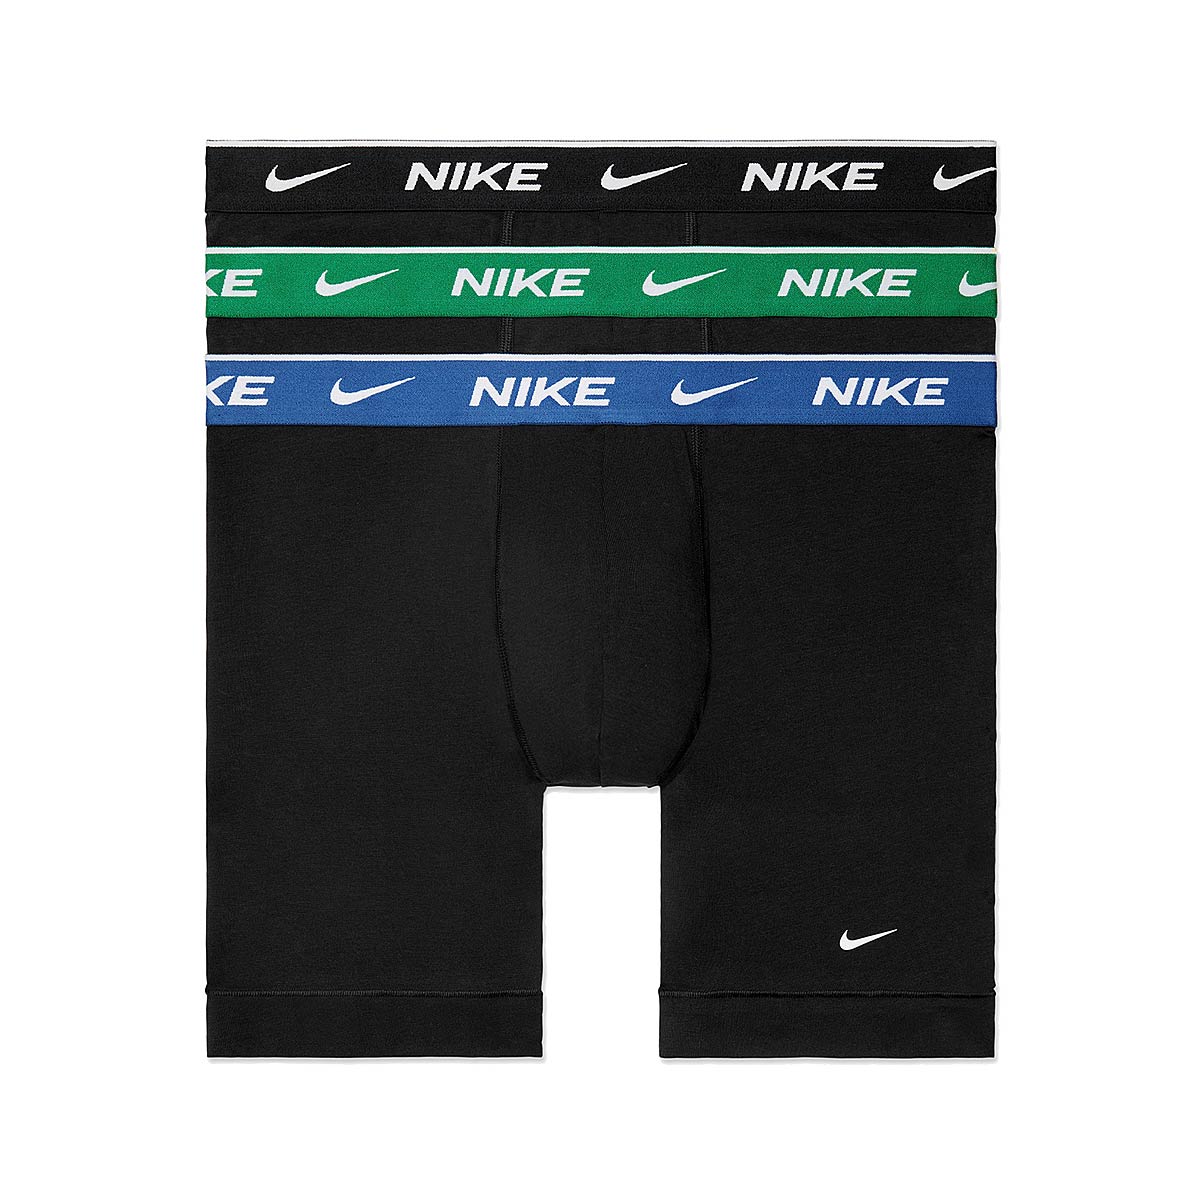 Image of Nike Boxer Brief 3pk, Black/multicolour